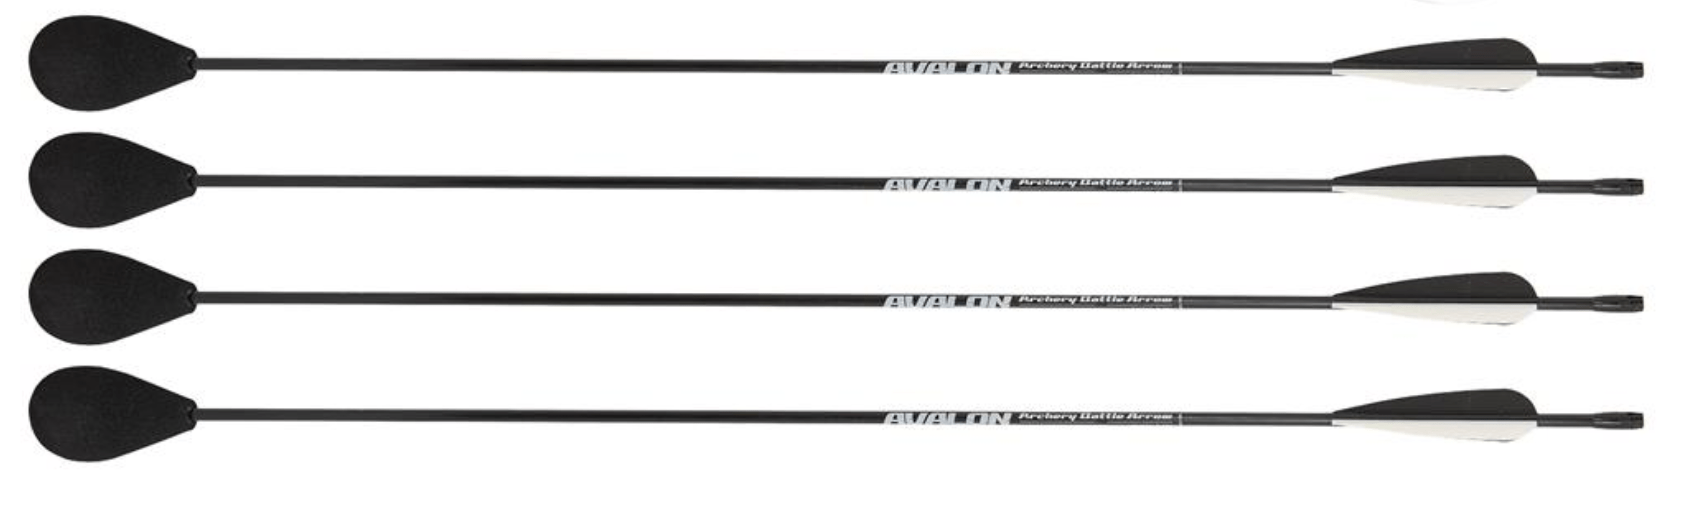 Archery Arrows Black ARROW 29